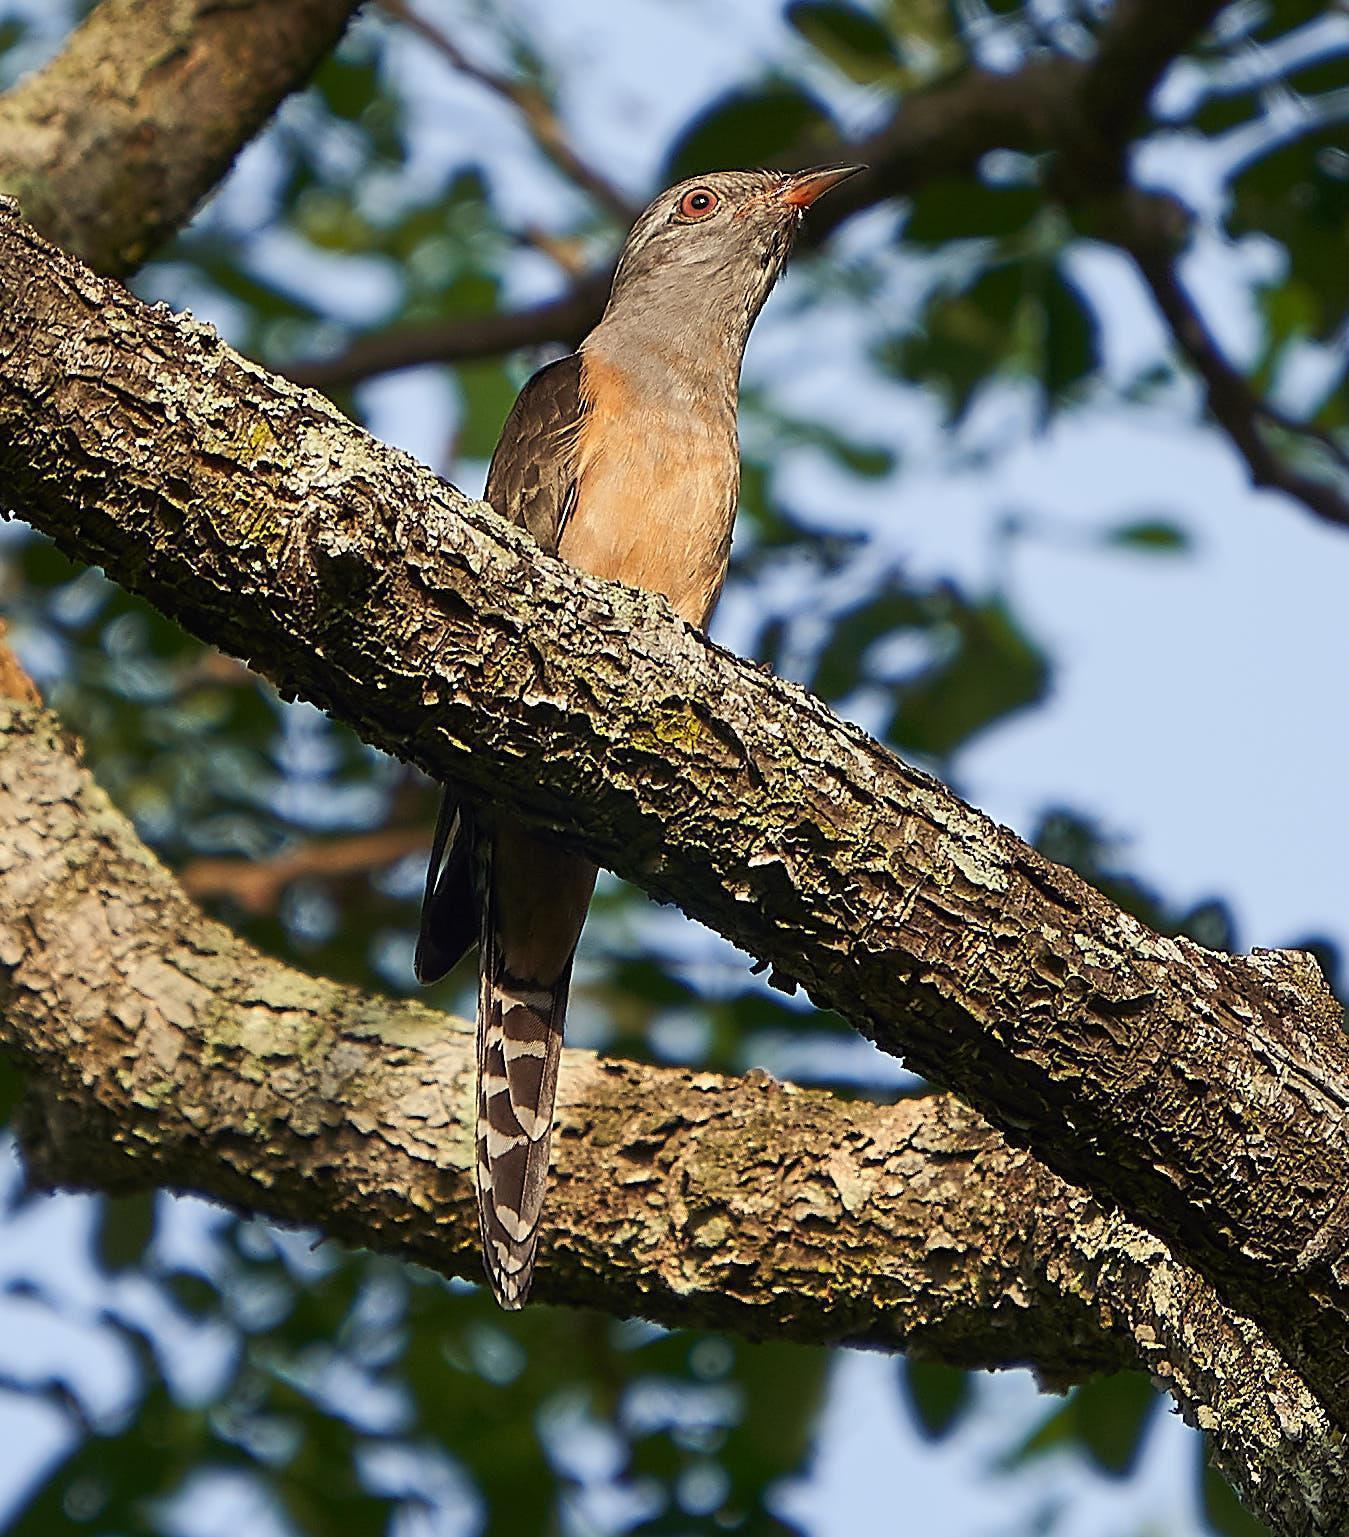 Plaintive Cuckoo Photo by Steven Cheong